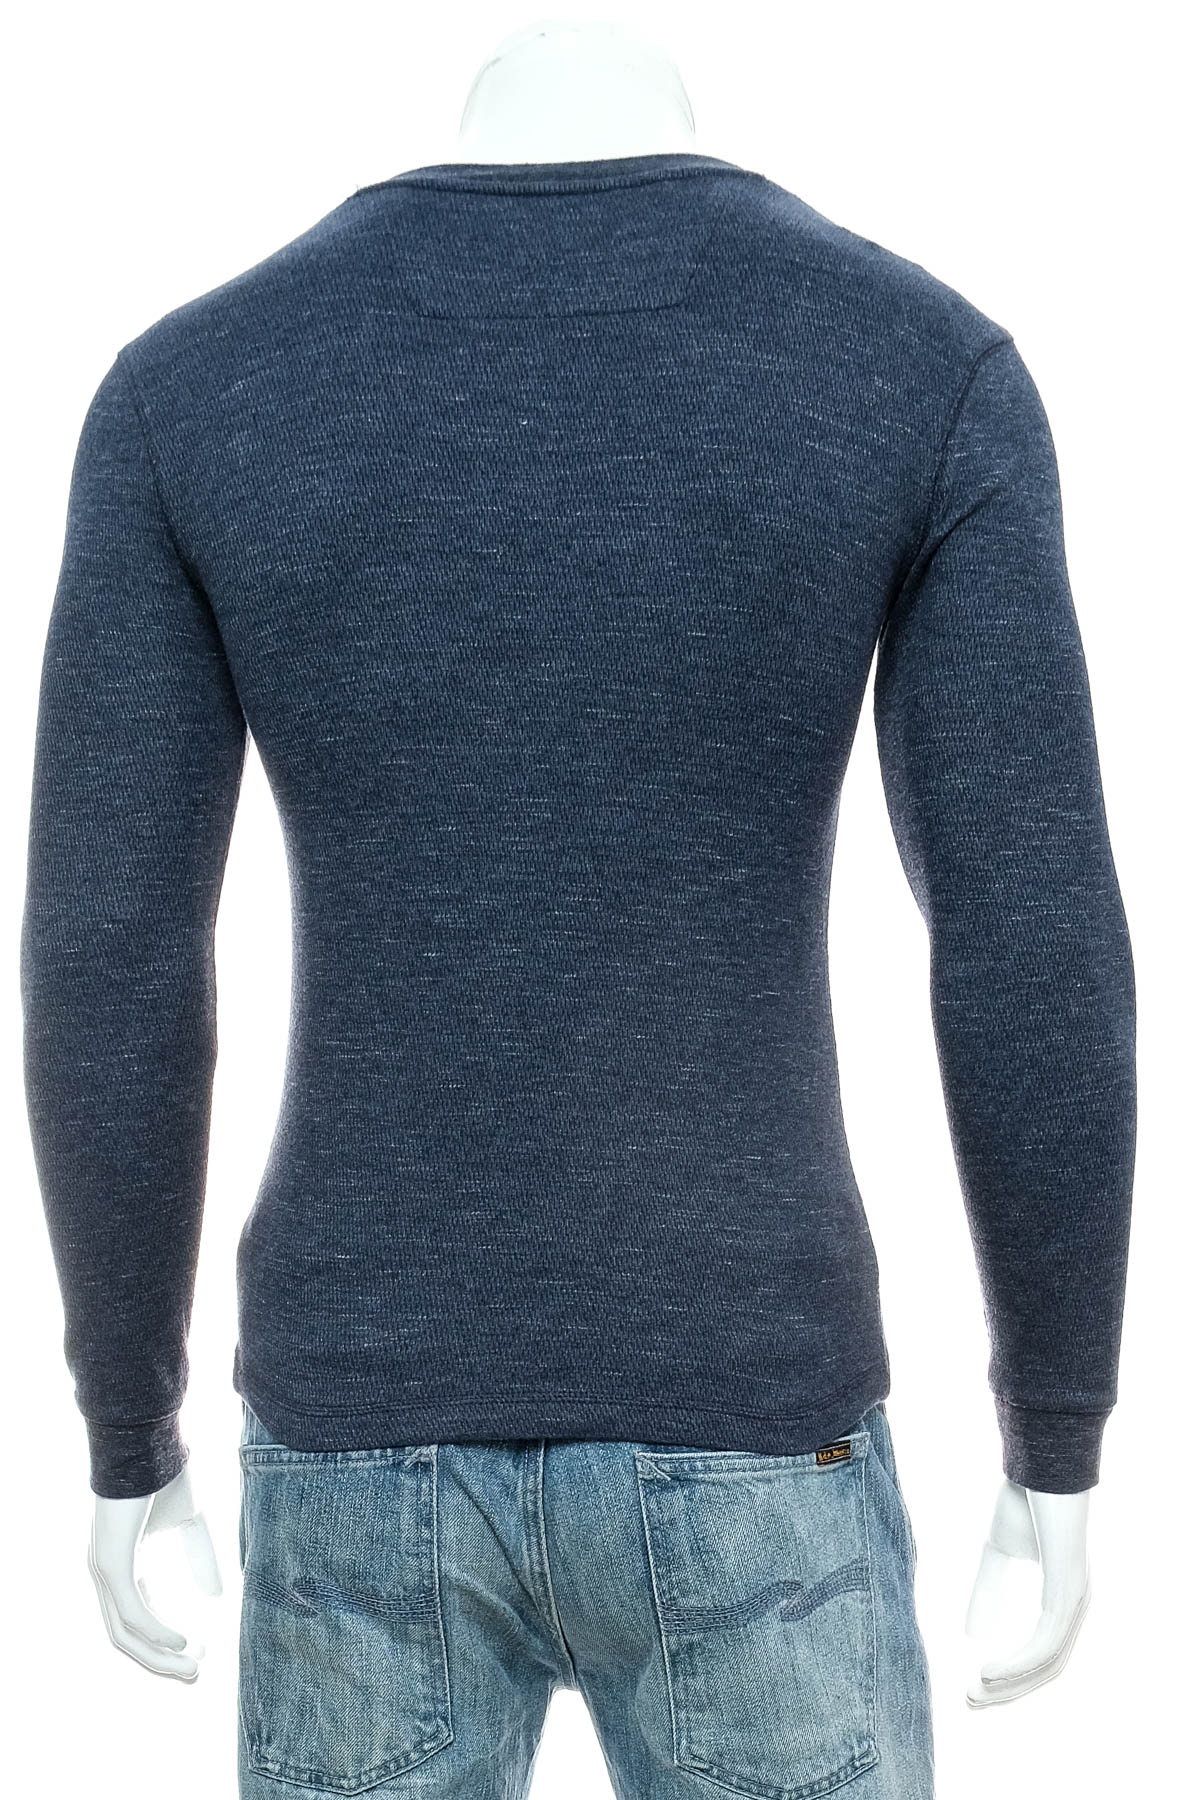 Men's sweater - GEORGE - 1